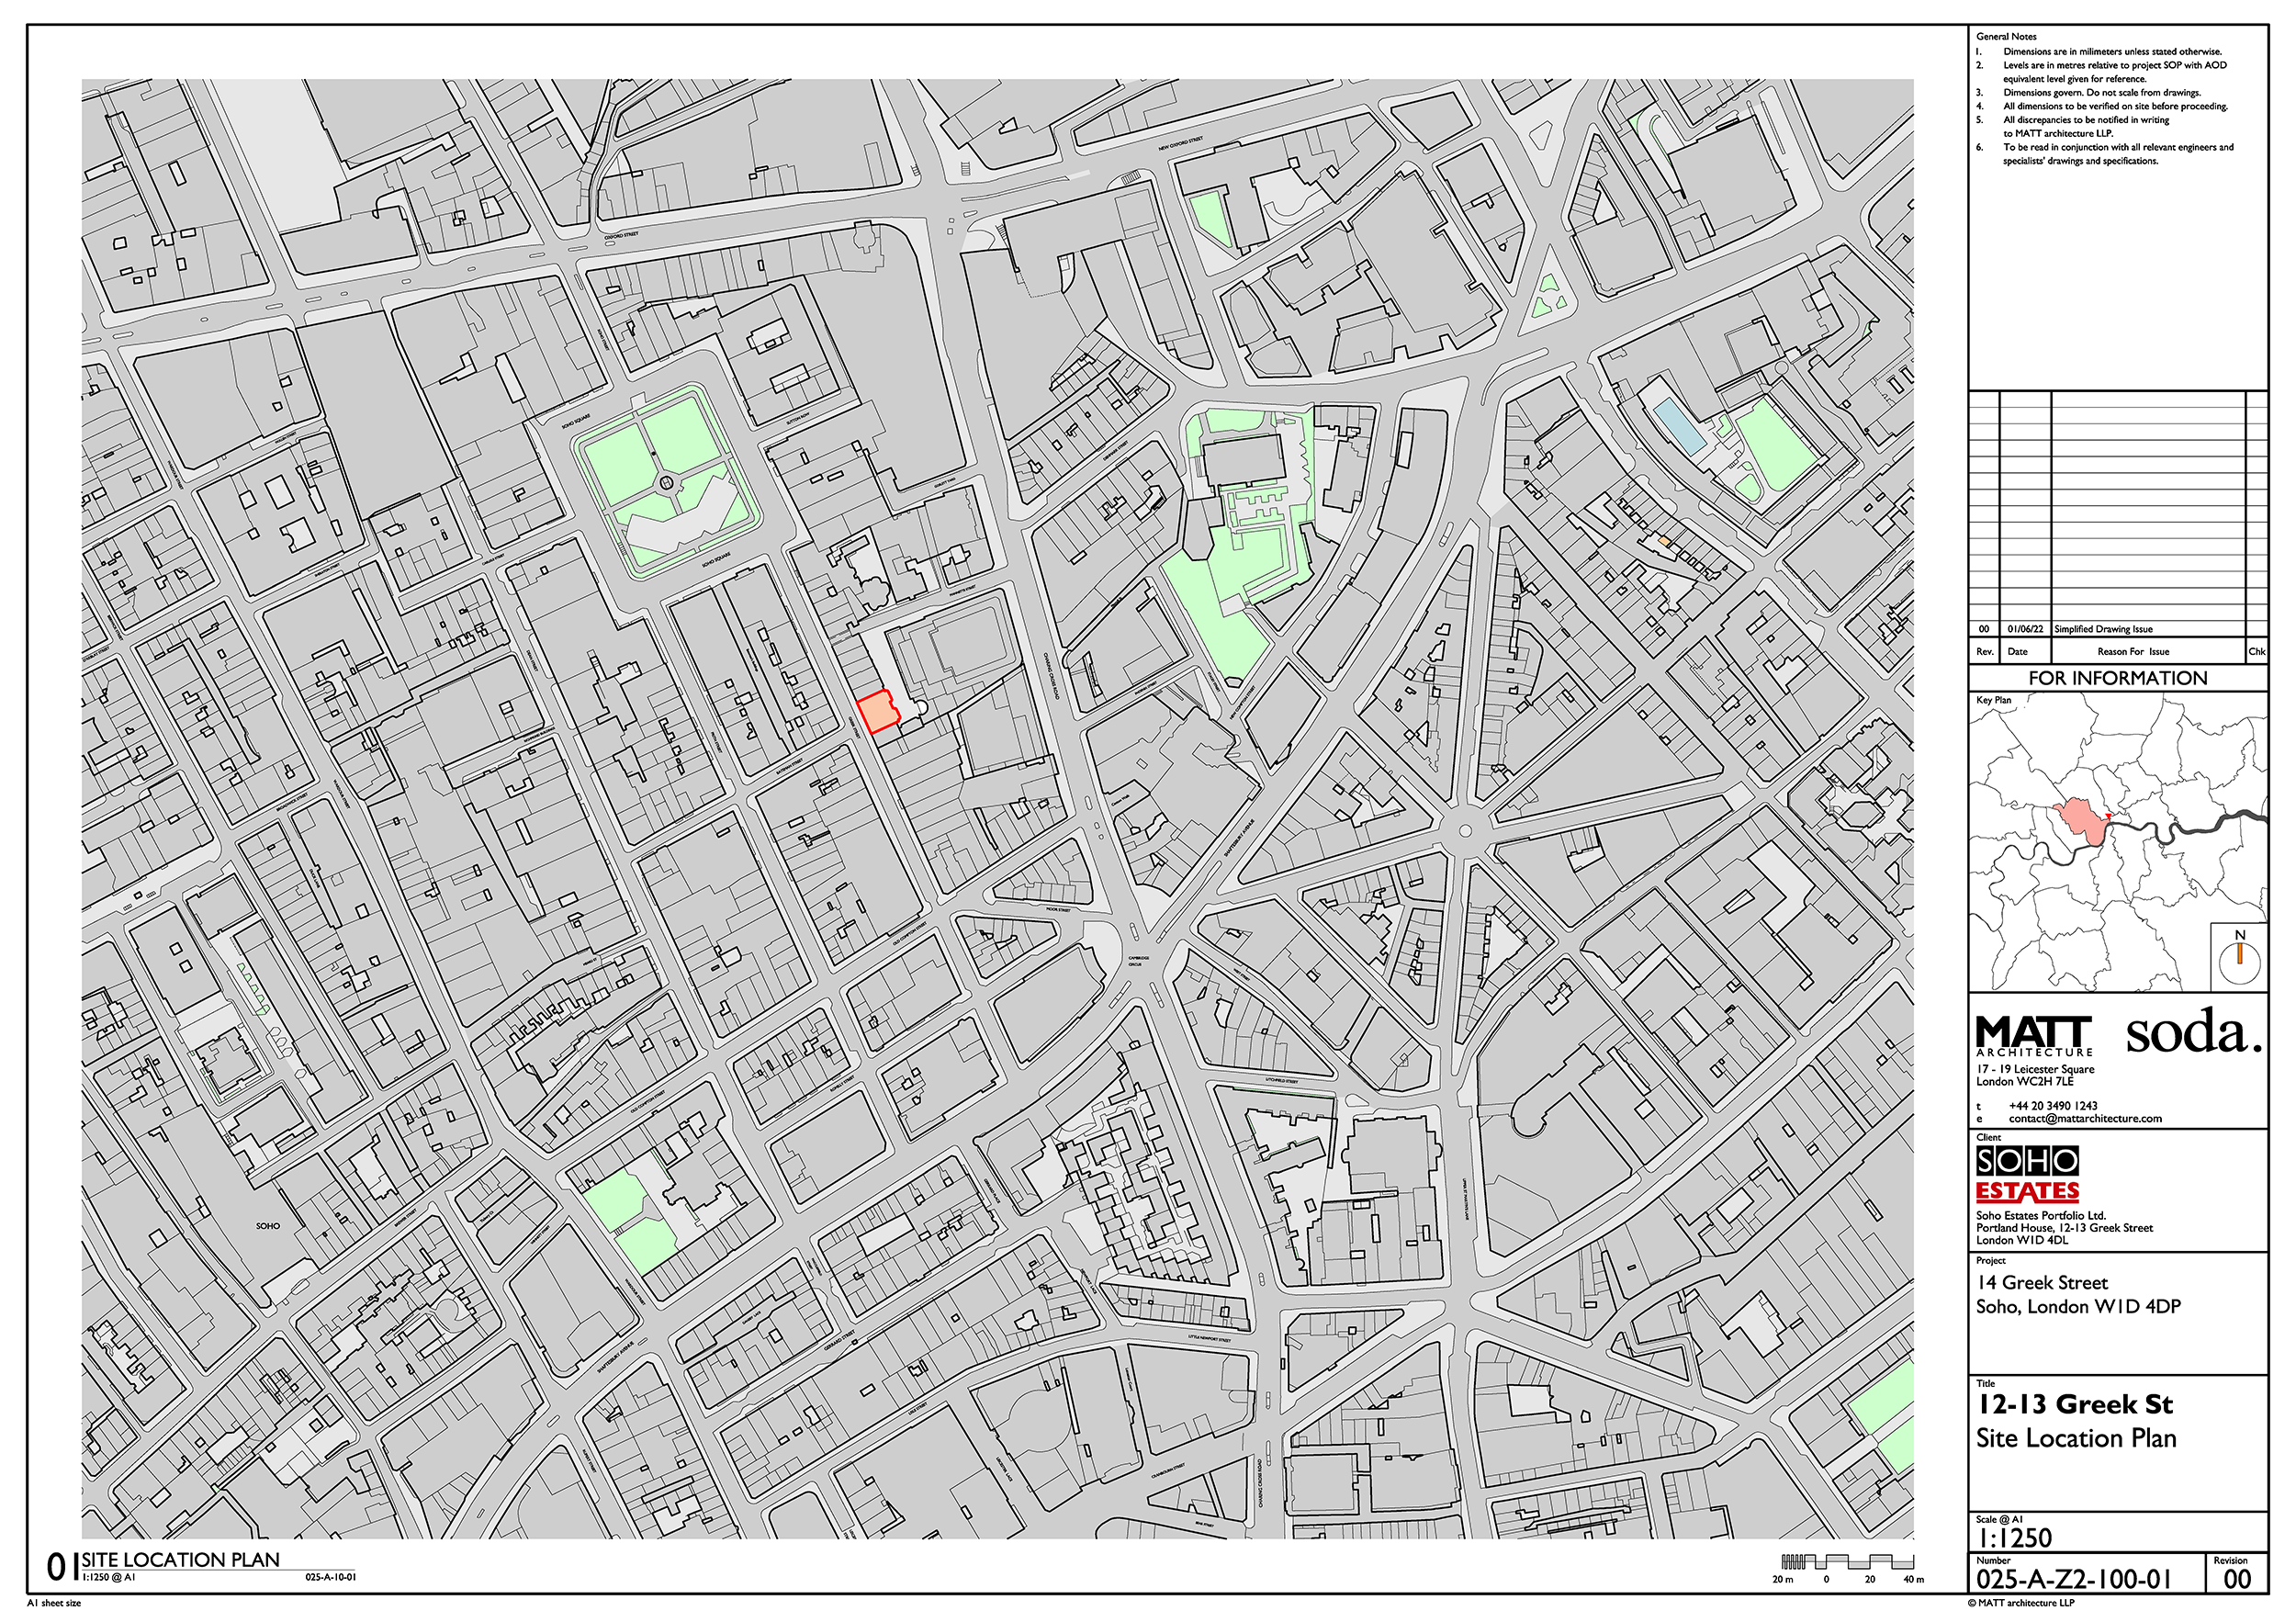 Location plan of 12-13 Greek Street